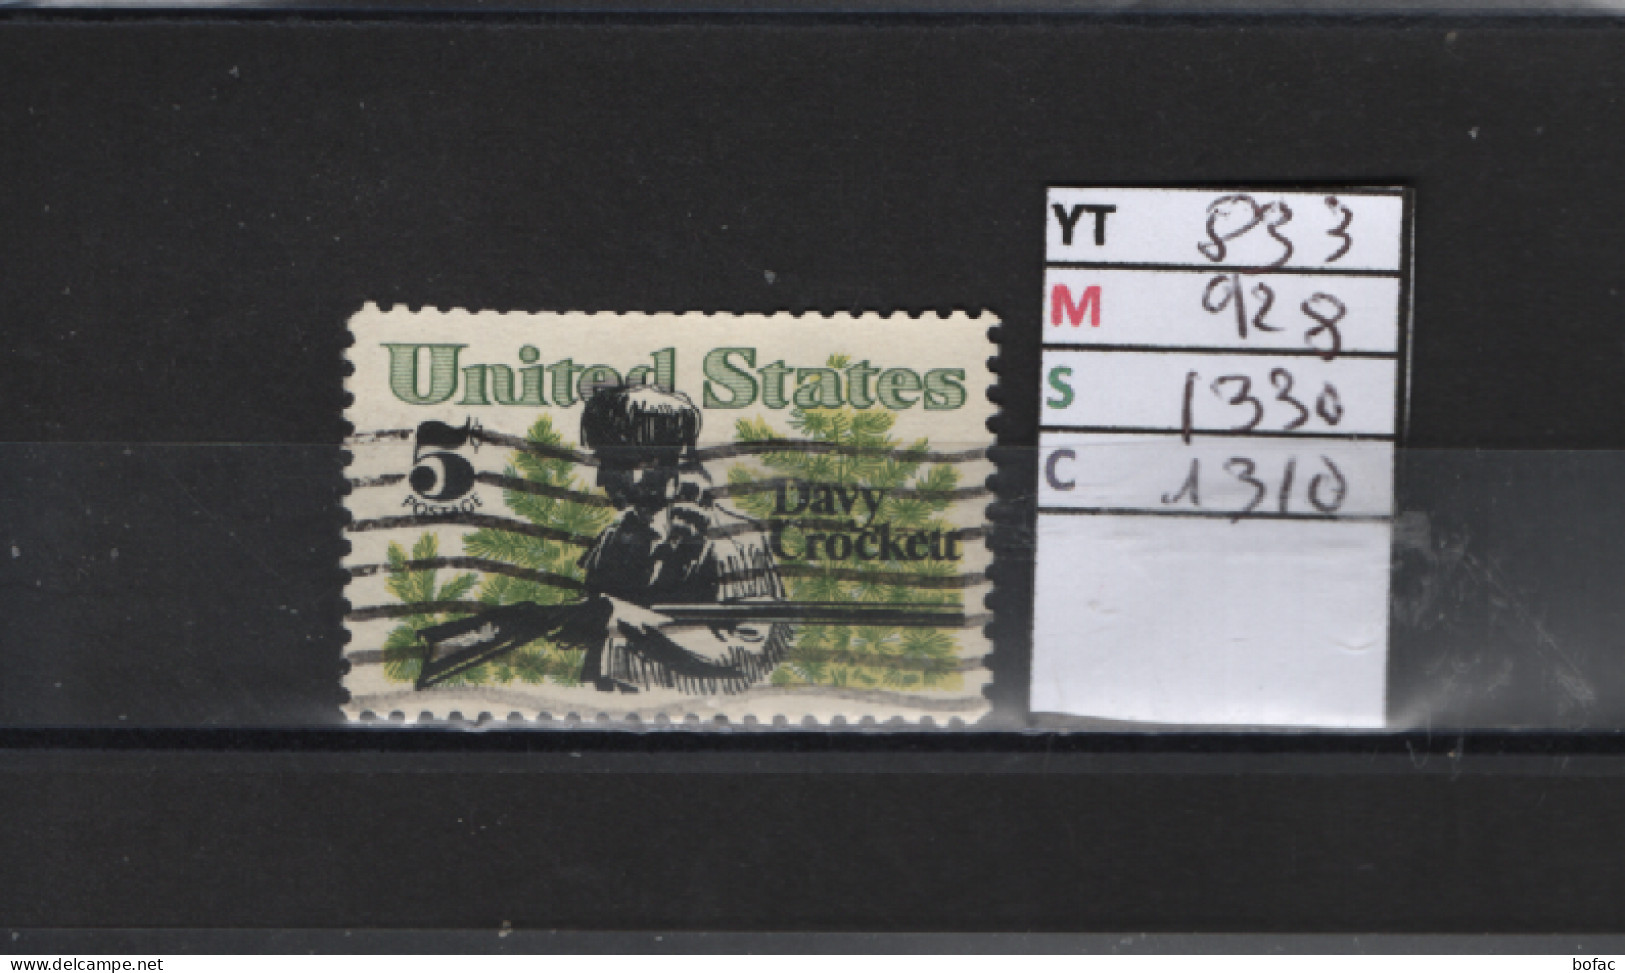 PRIX FIXE Obl  833 YT 928 MIC 1330 SCO 1310 GIB  David Crockett 1967 Etats Unis  58A/12 - Used Stamps